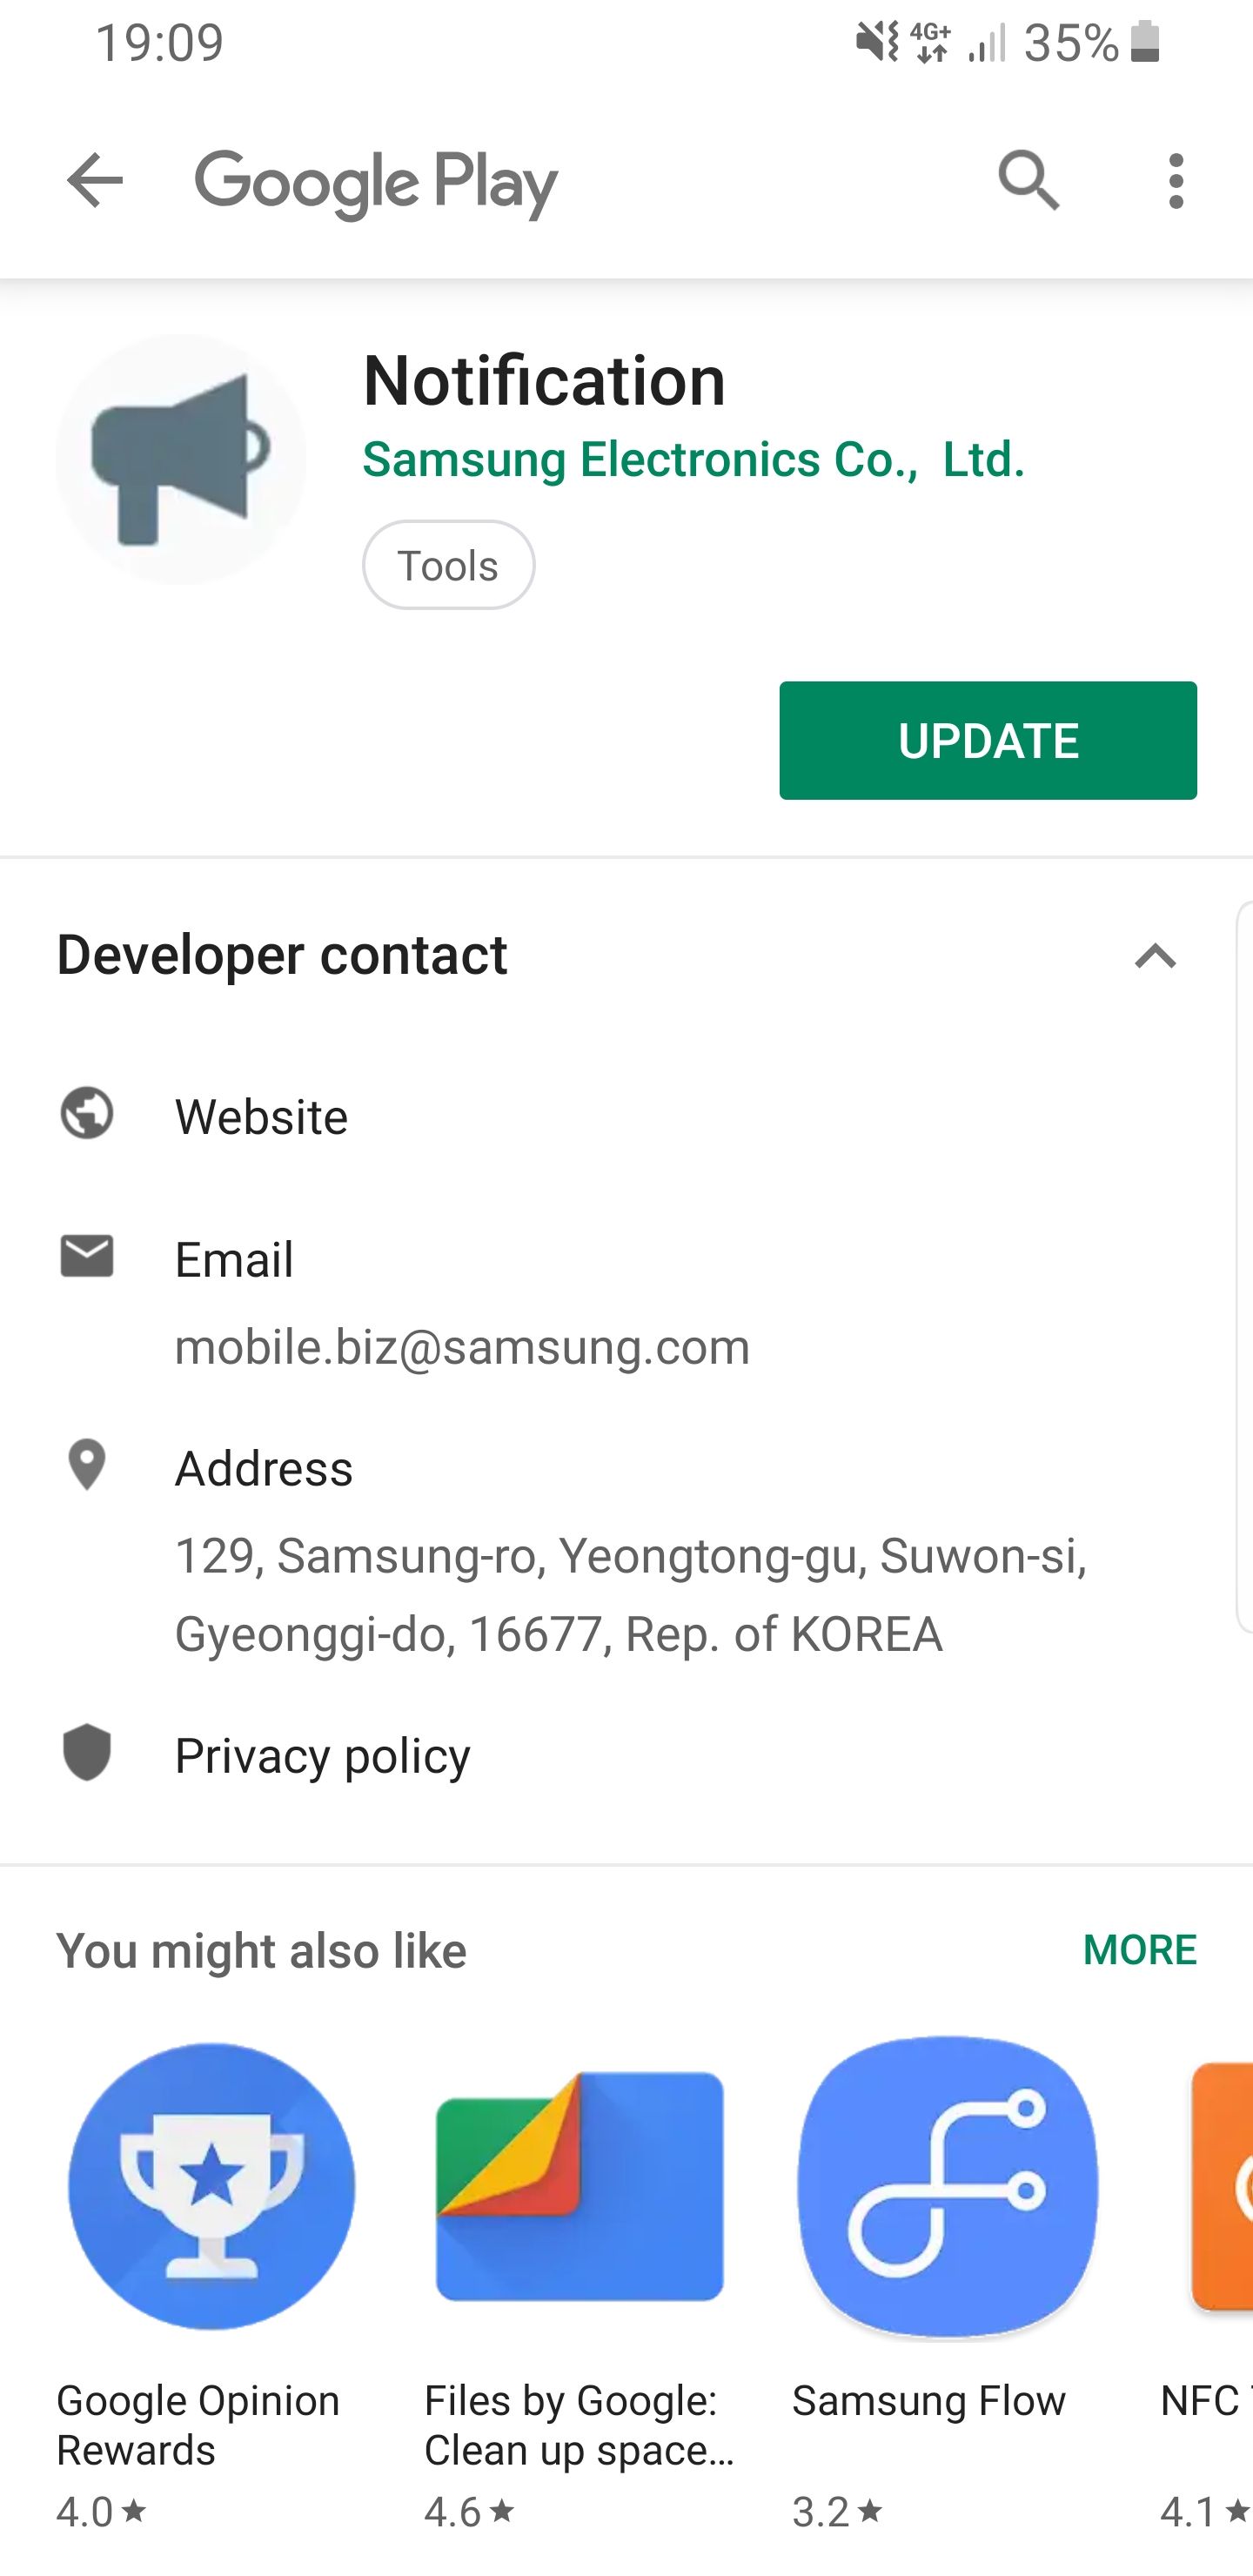 No, the Samsung Notification app update is not dangerous